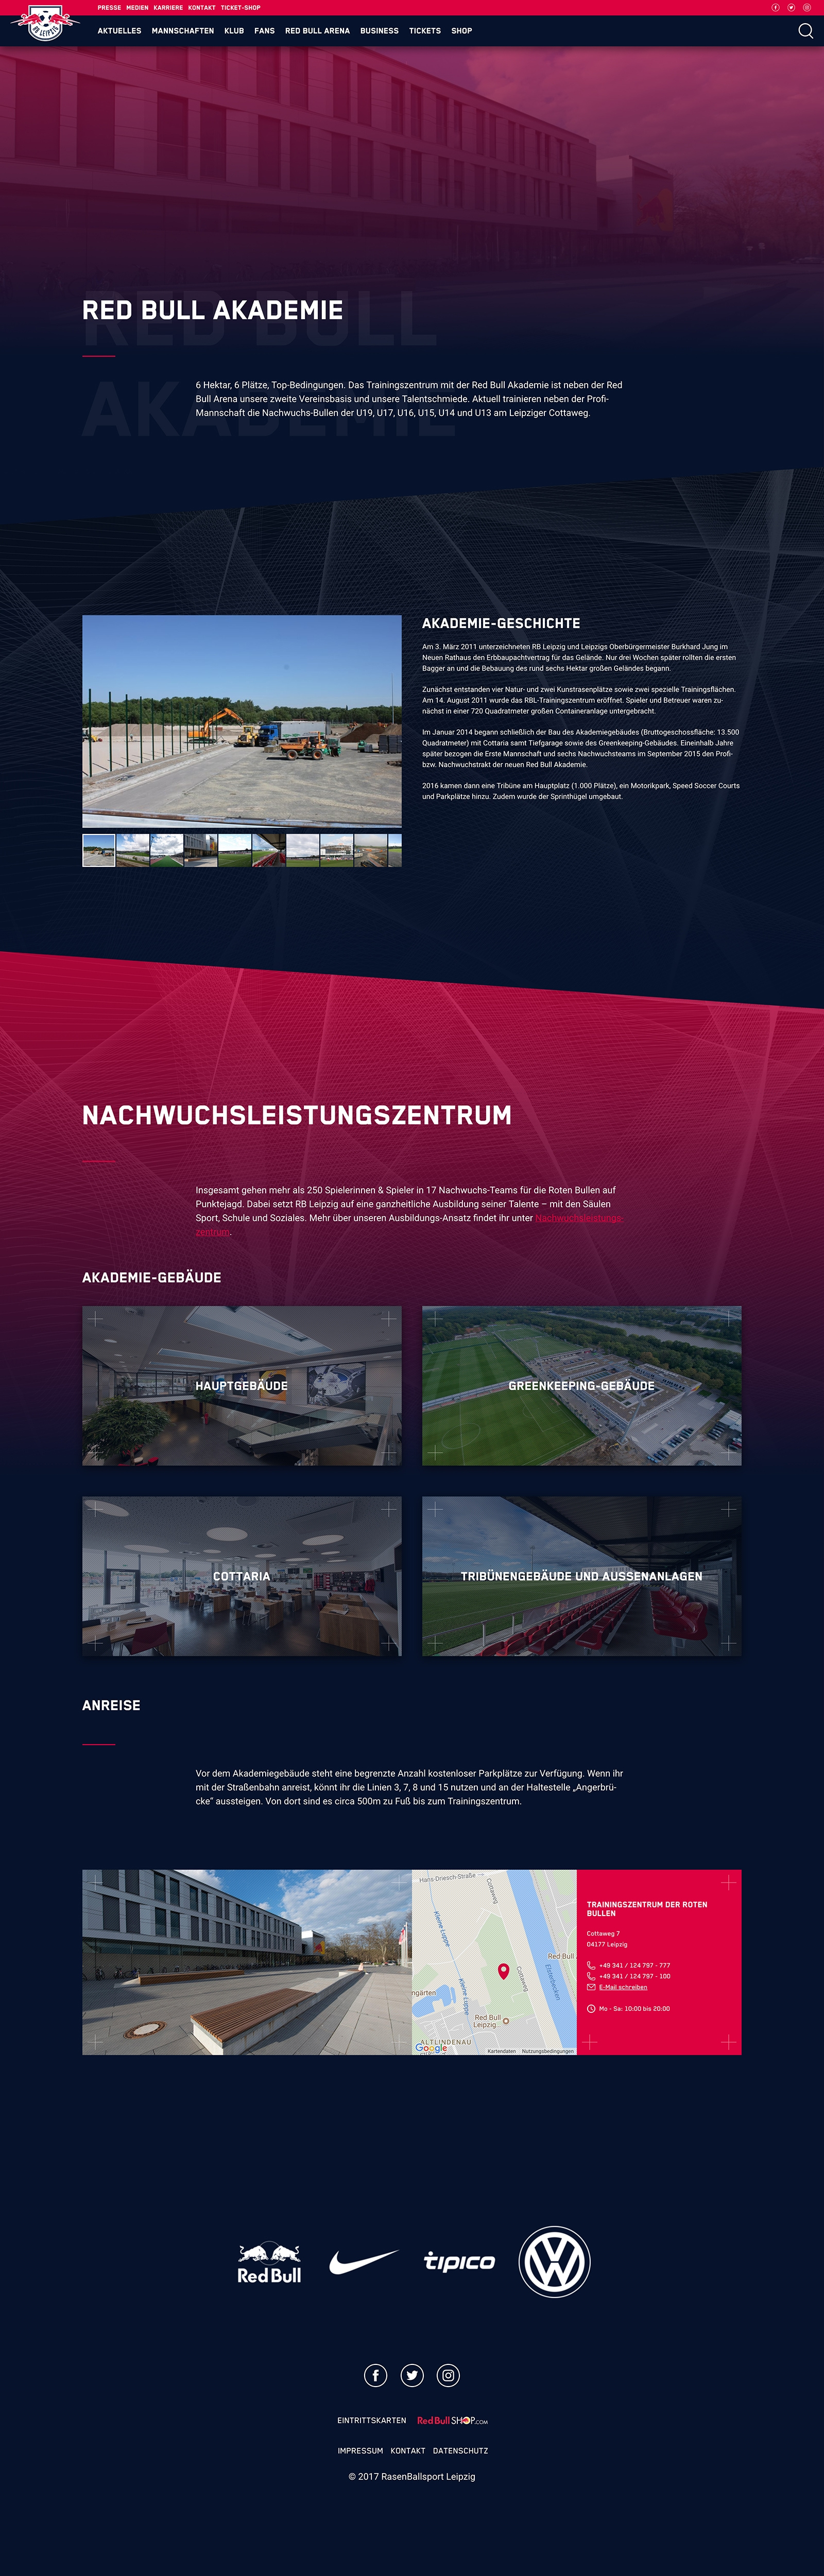 Rb Leipzig Website Relaunch 2017 Image 14